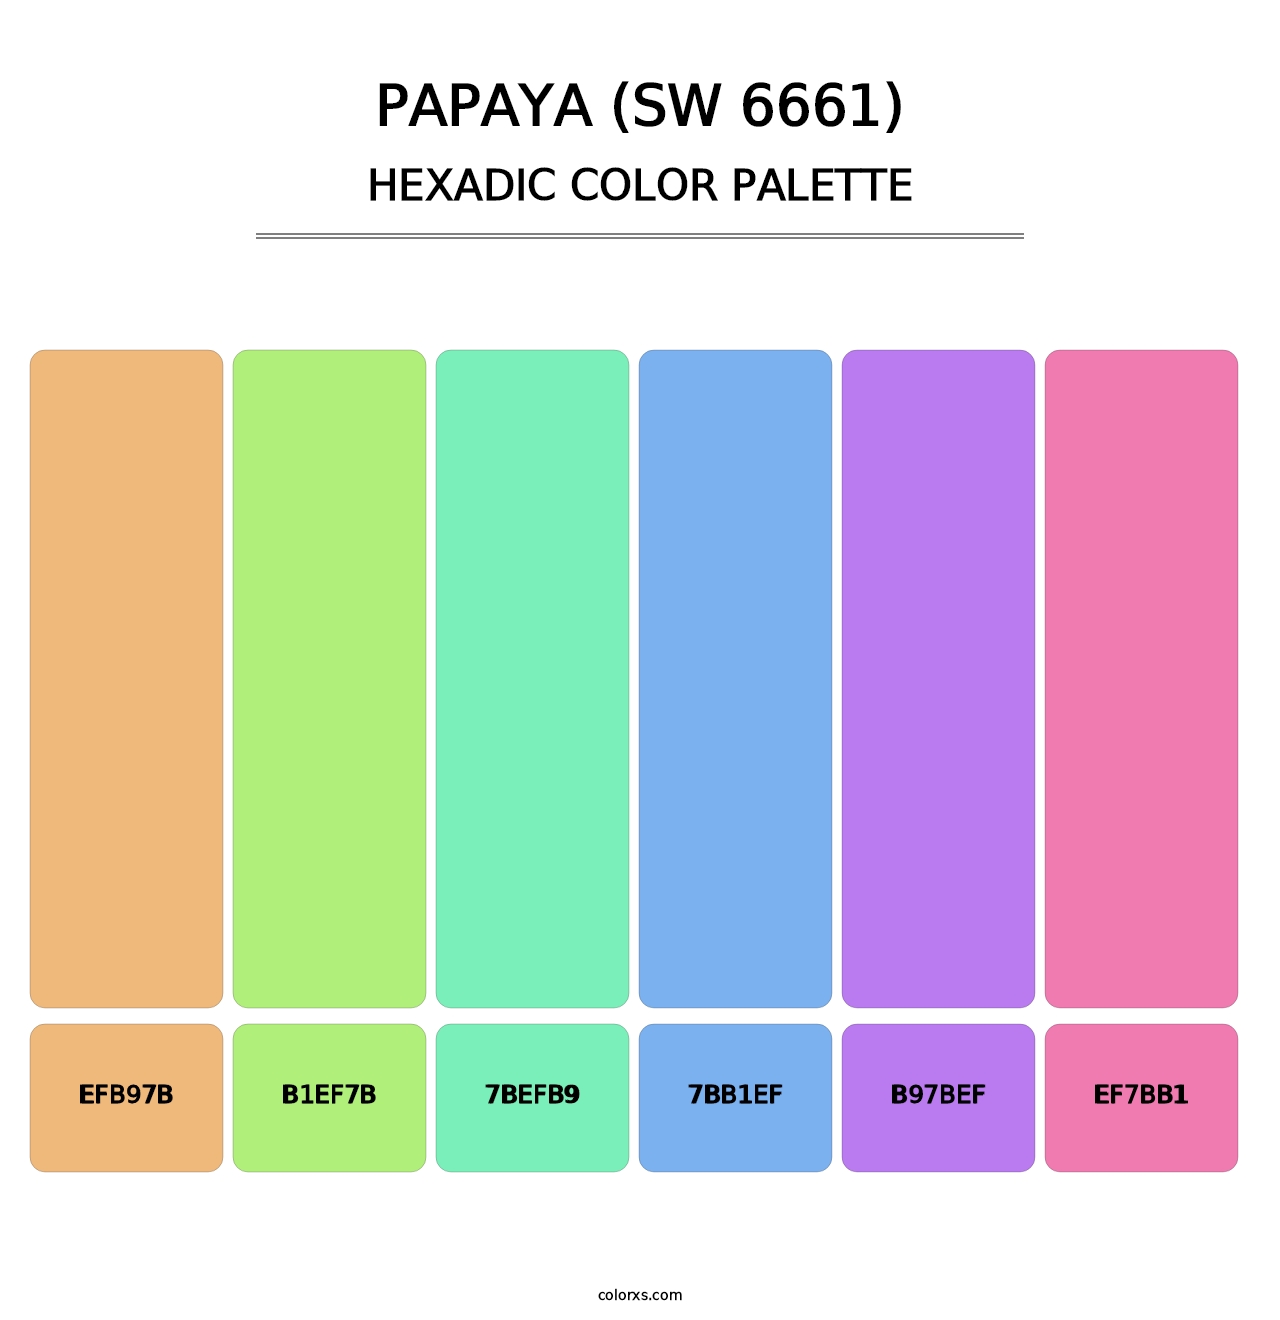 Papaya (SW 6661) - Hexadic Color Palette